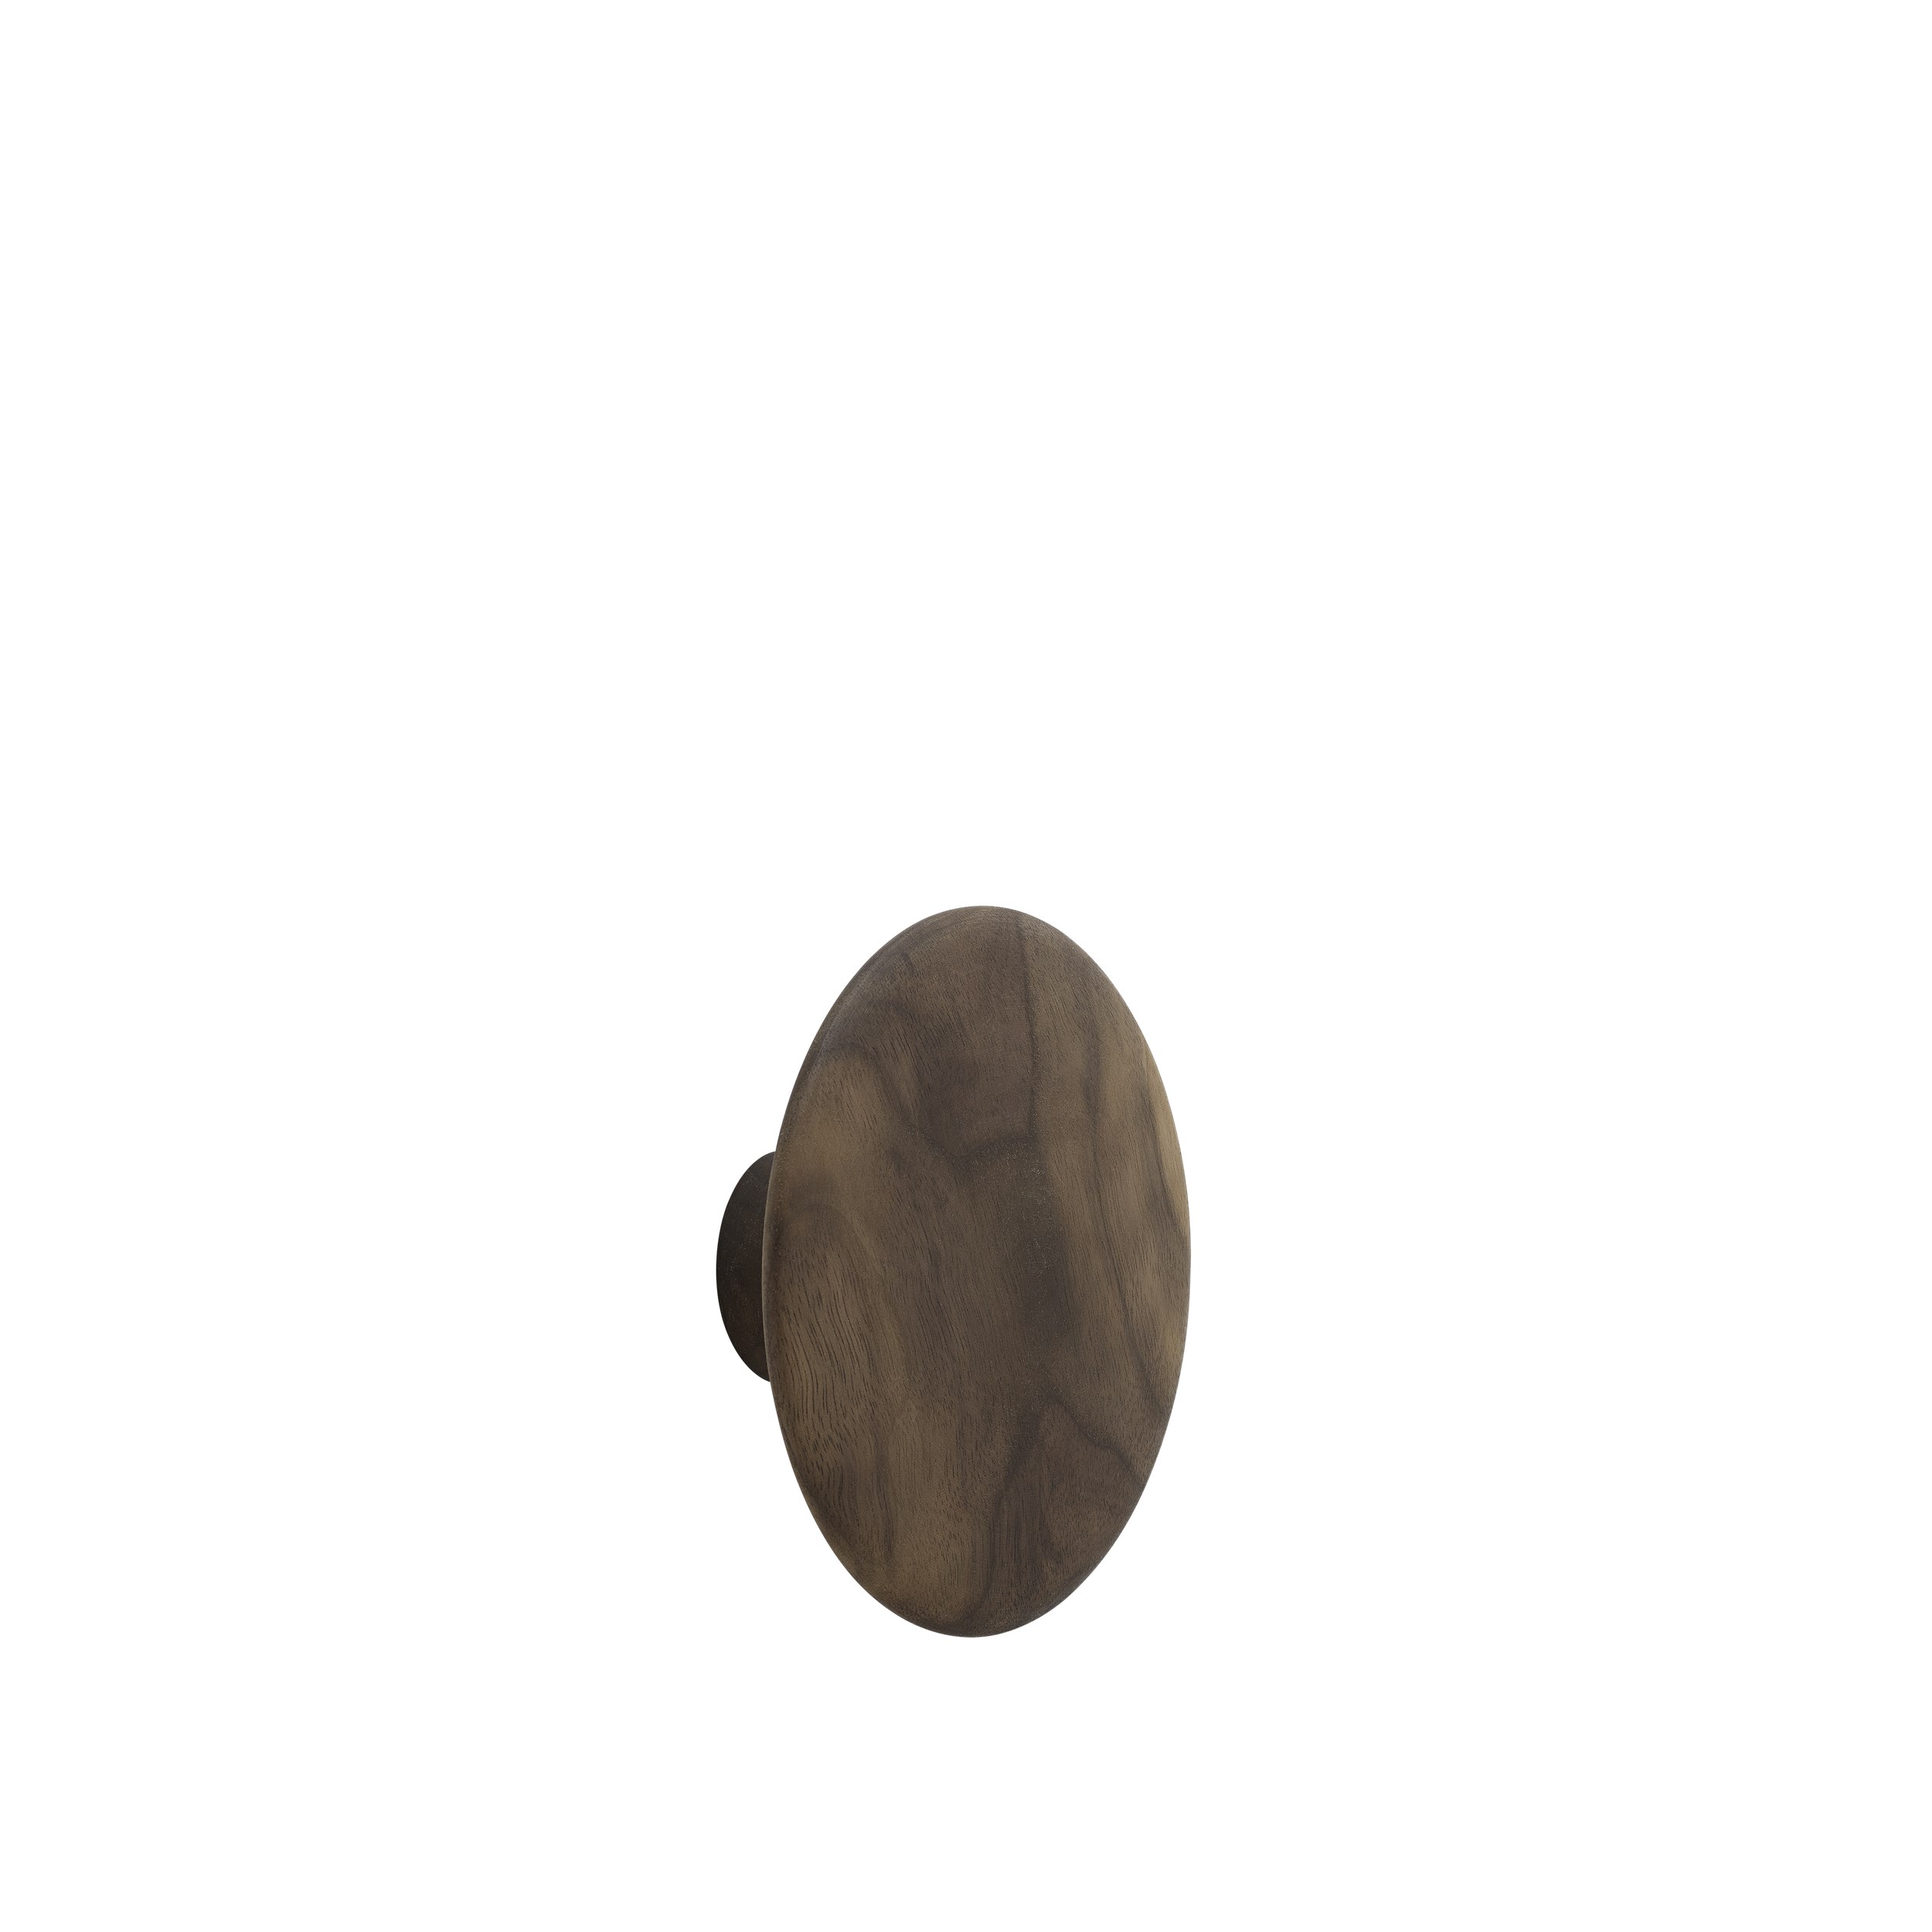 Dot wood medium Ø 13 cm walnut